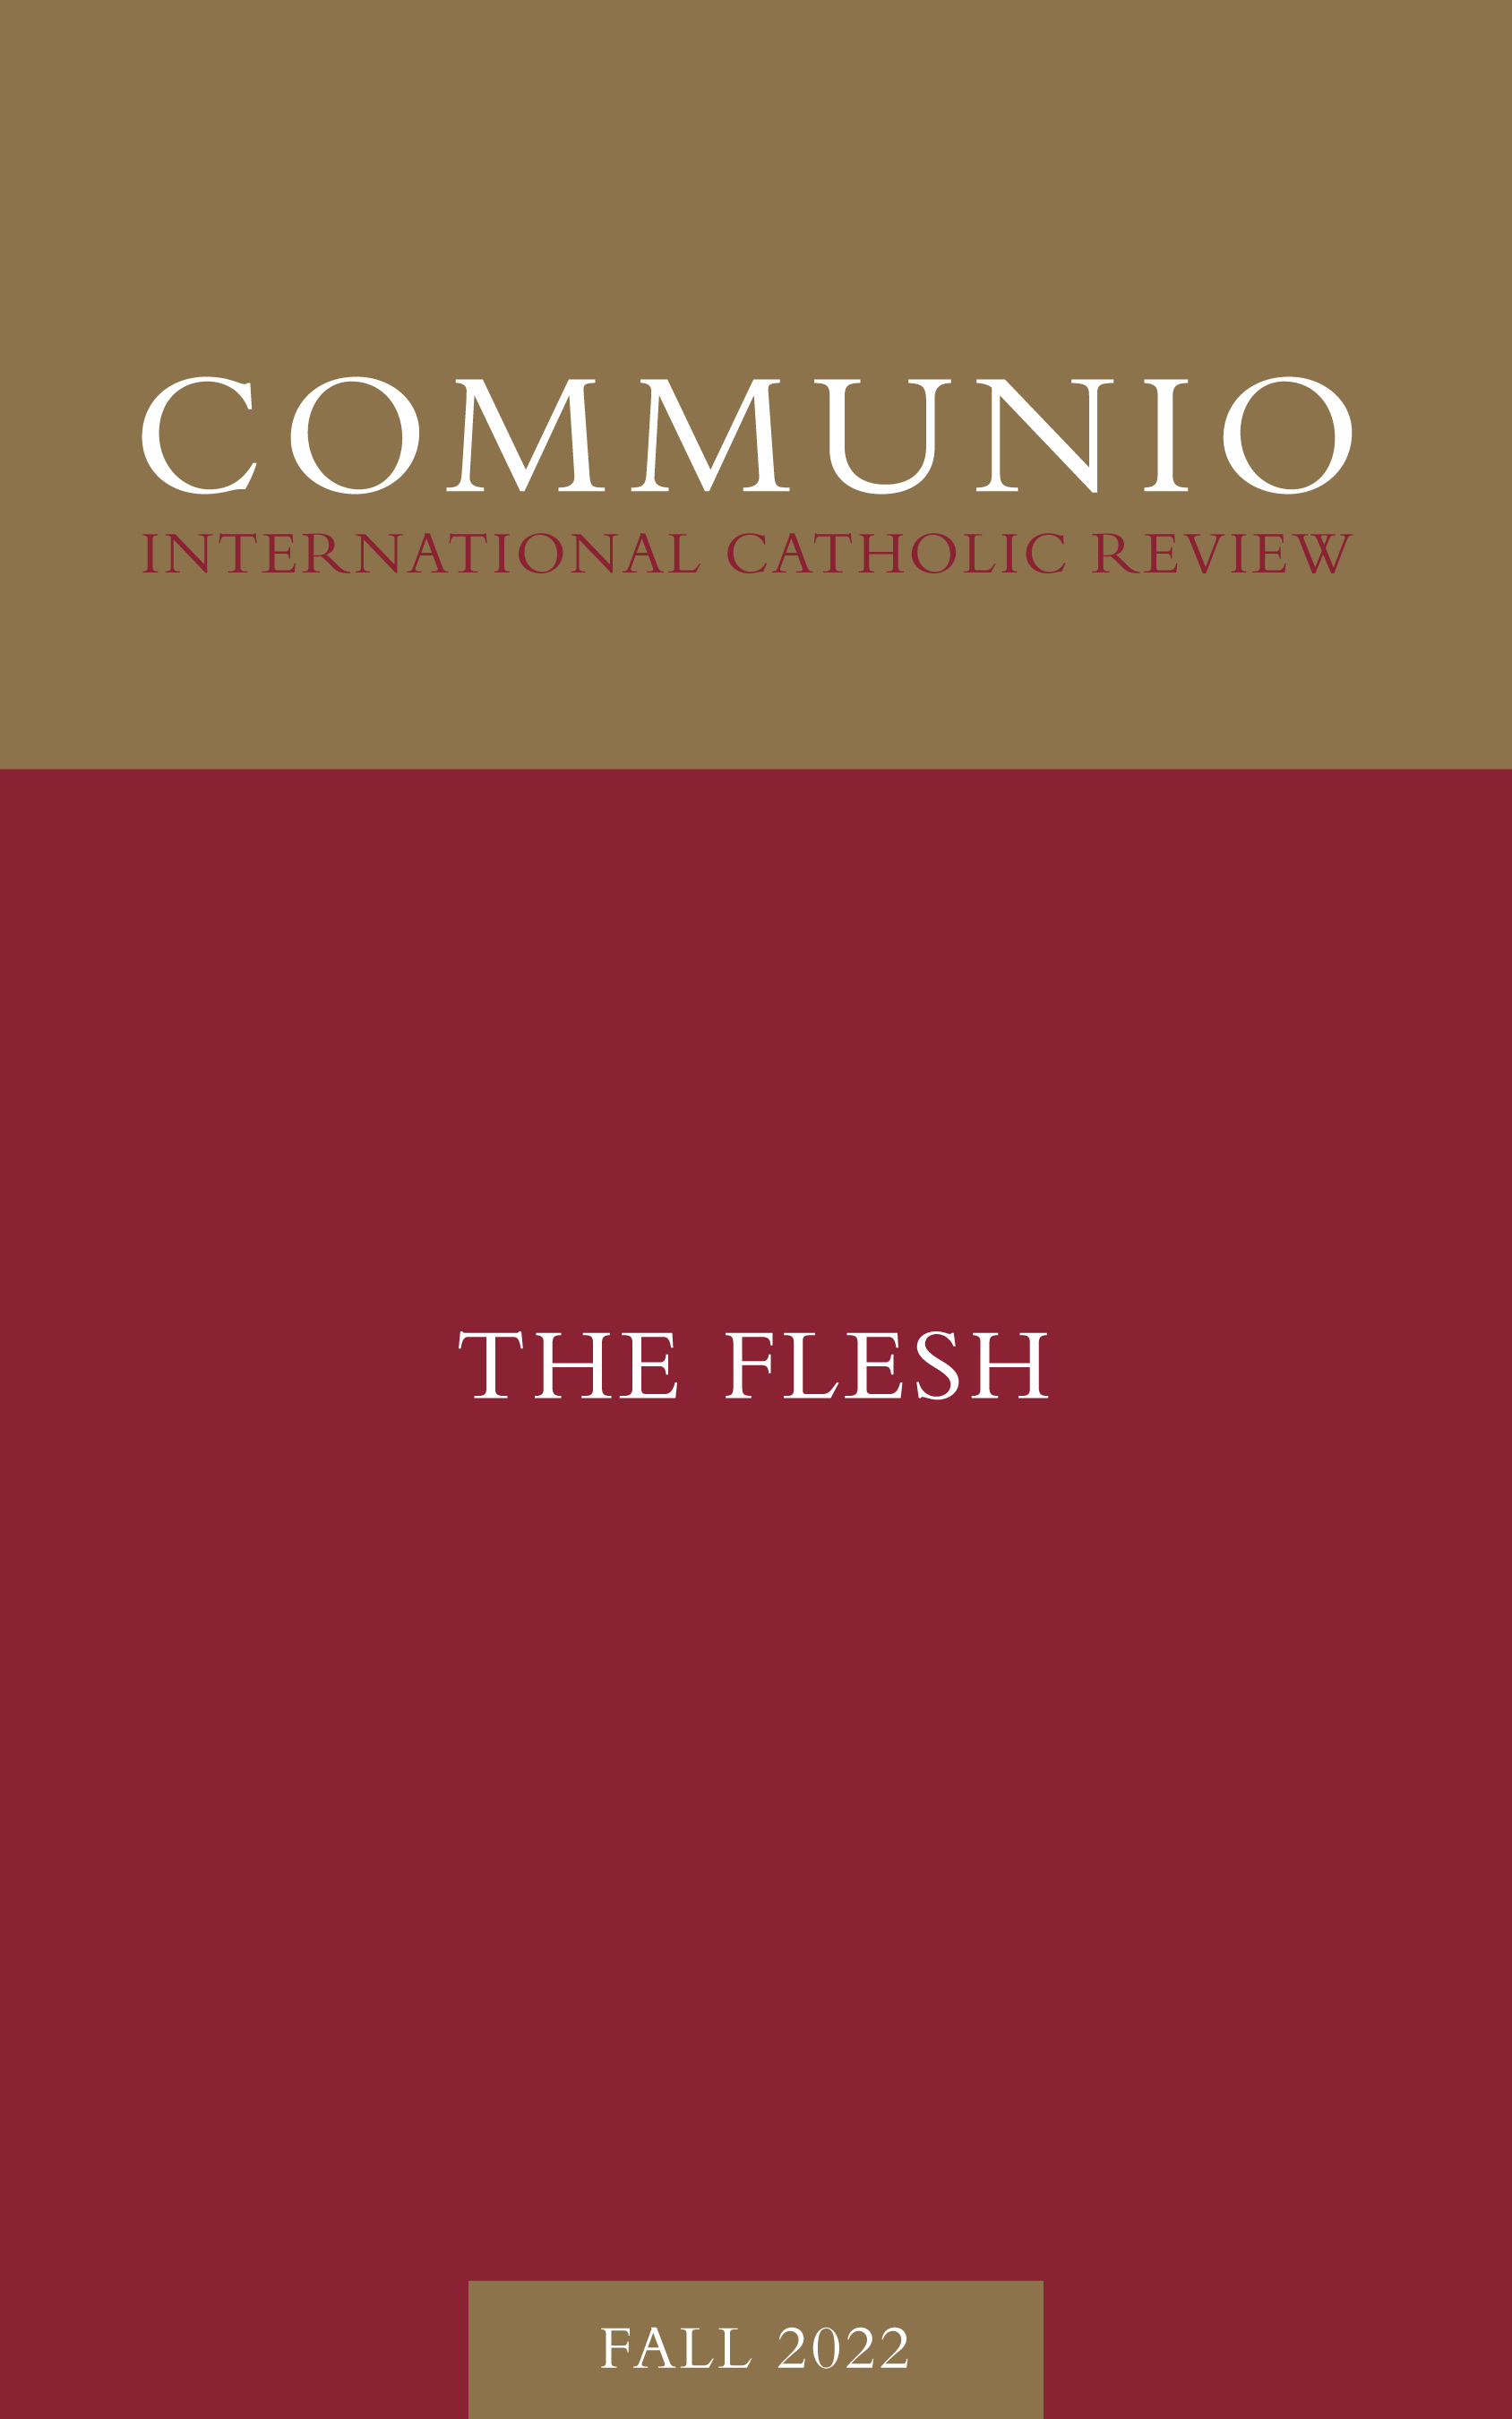 Communio - Fall 2022 - The Flesh